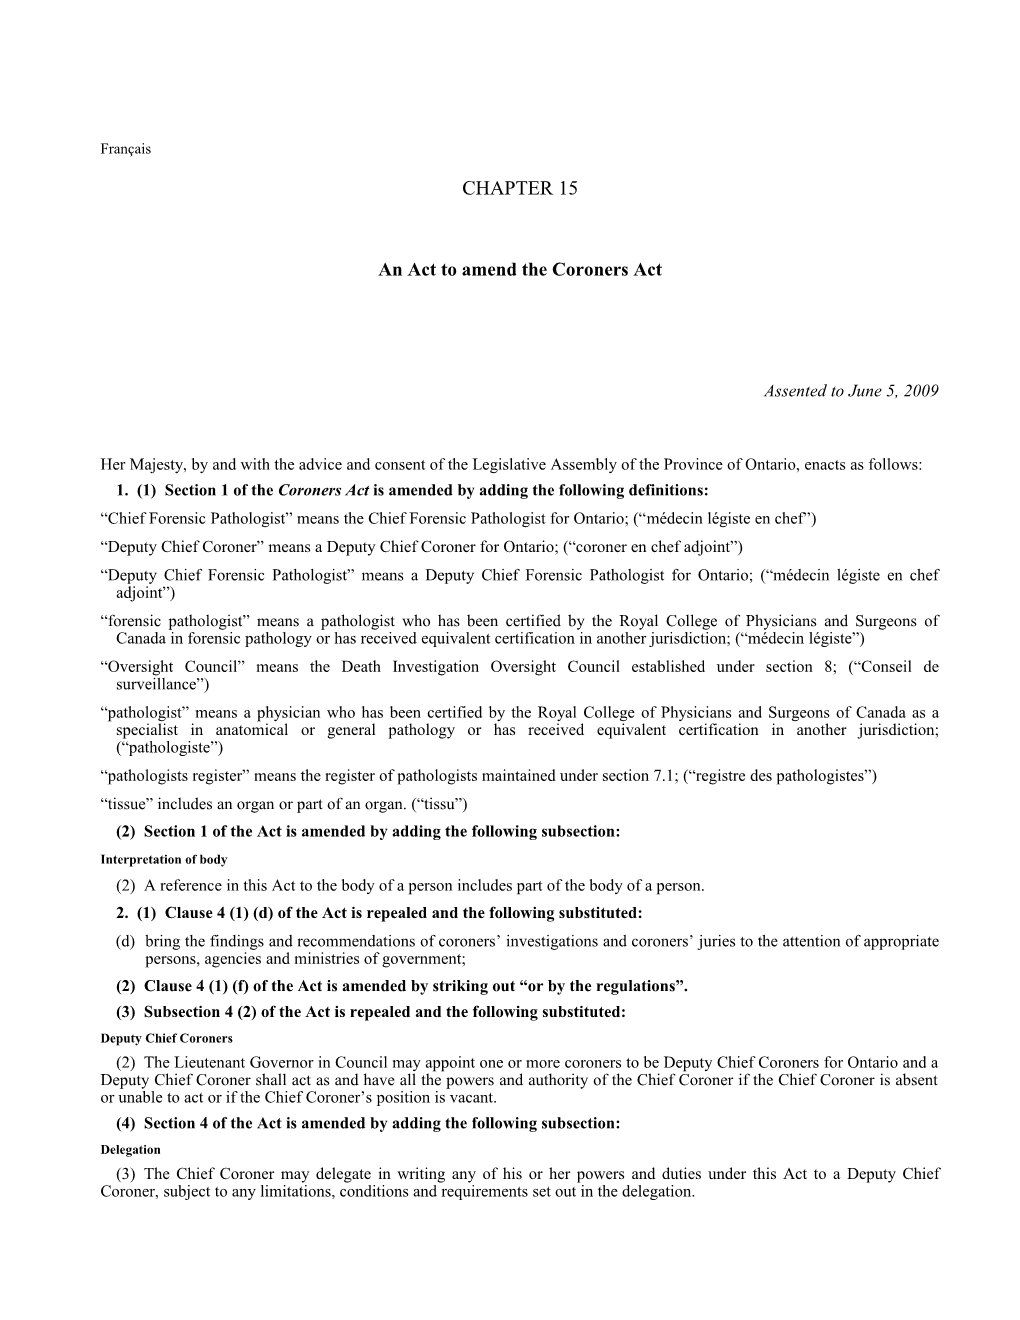 Coroners Amendment Act, 2009, S.O. 2009, C. 15 - Bill 115